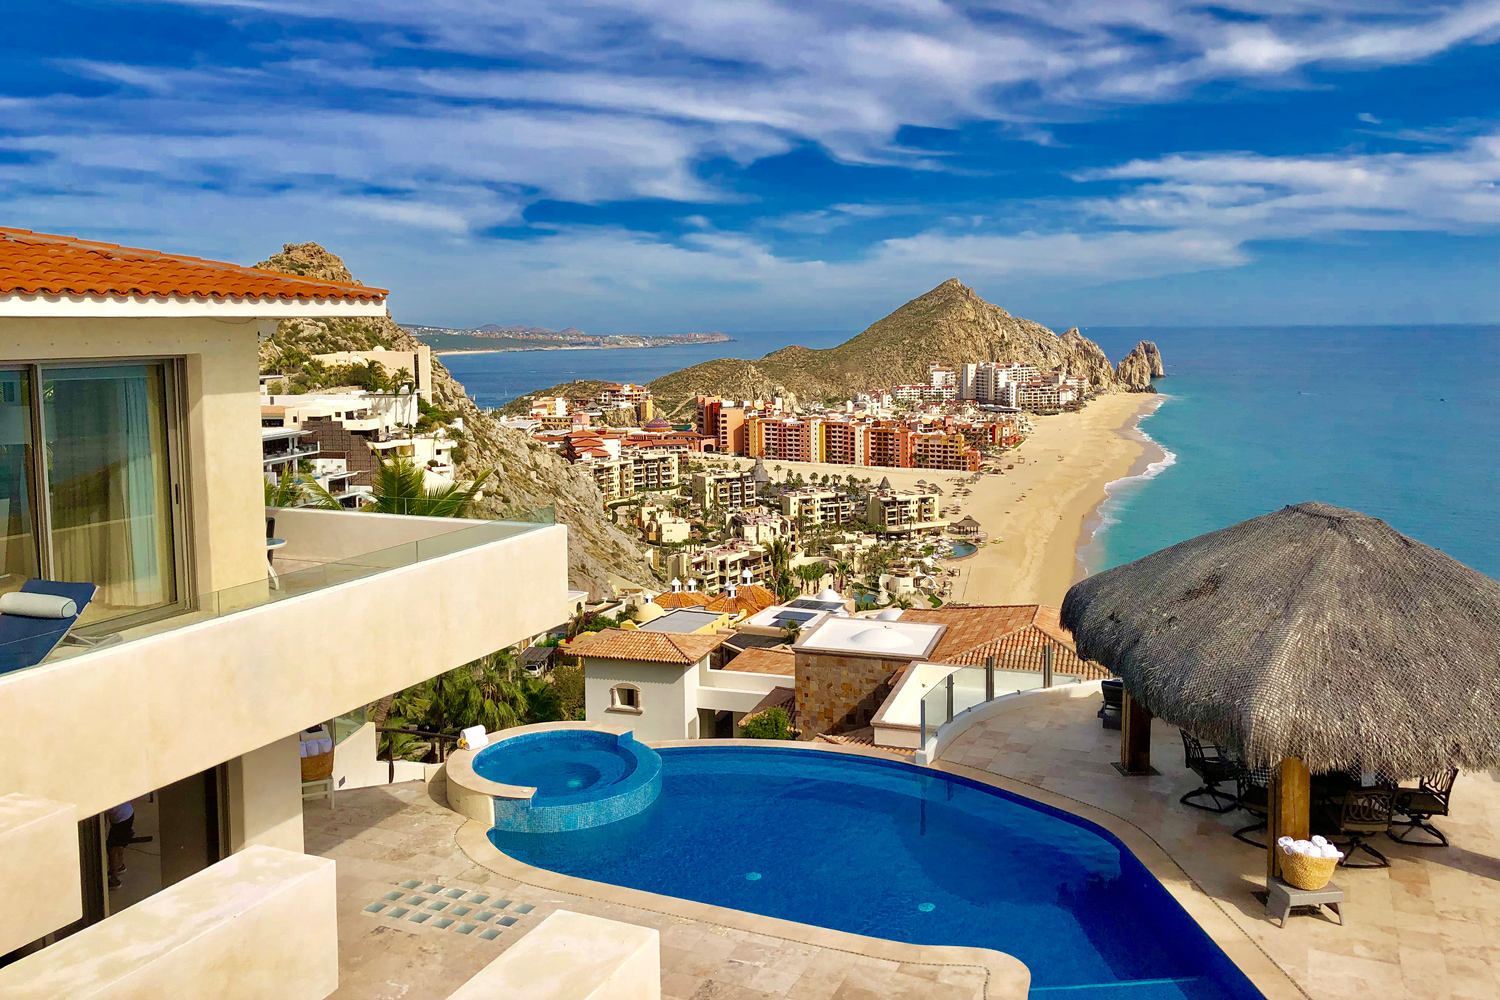 Hilltop location with ocean views at Luxury private vacation rental Villa Penasco in Cabo San Lucas Mexico